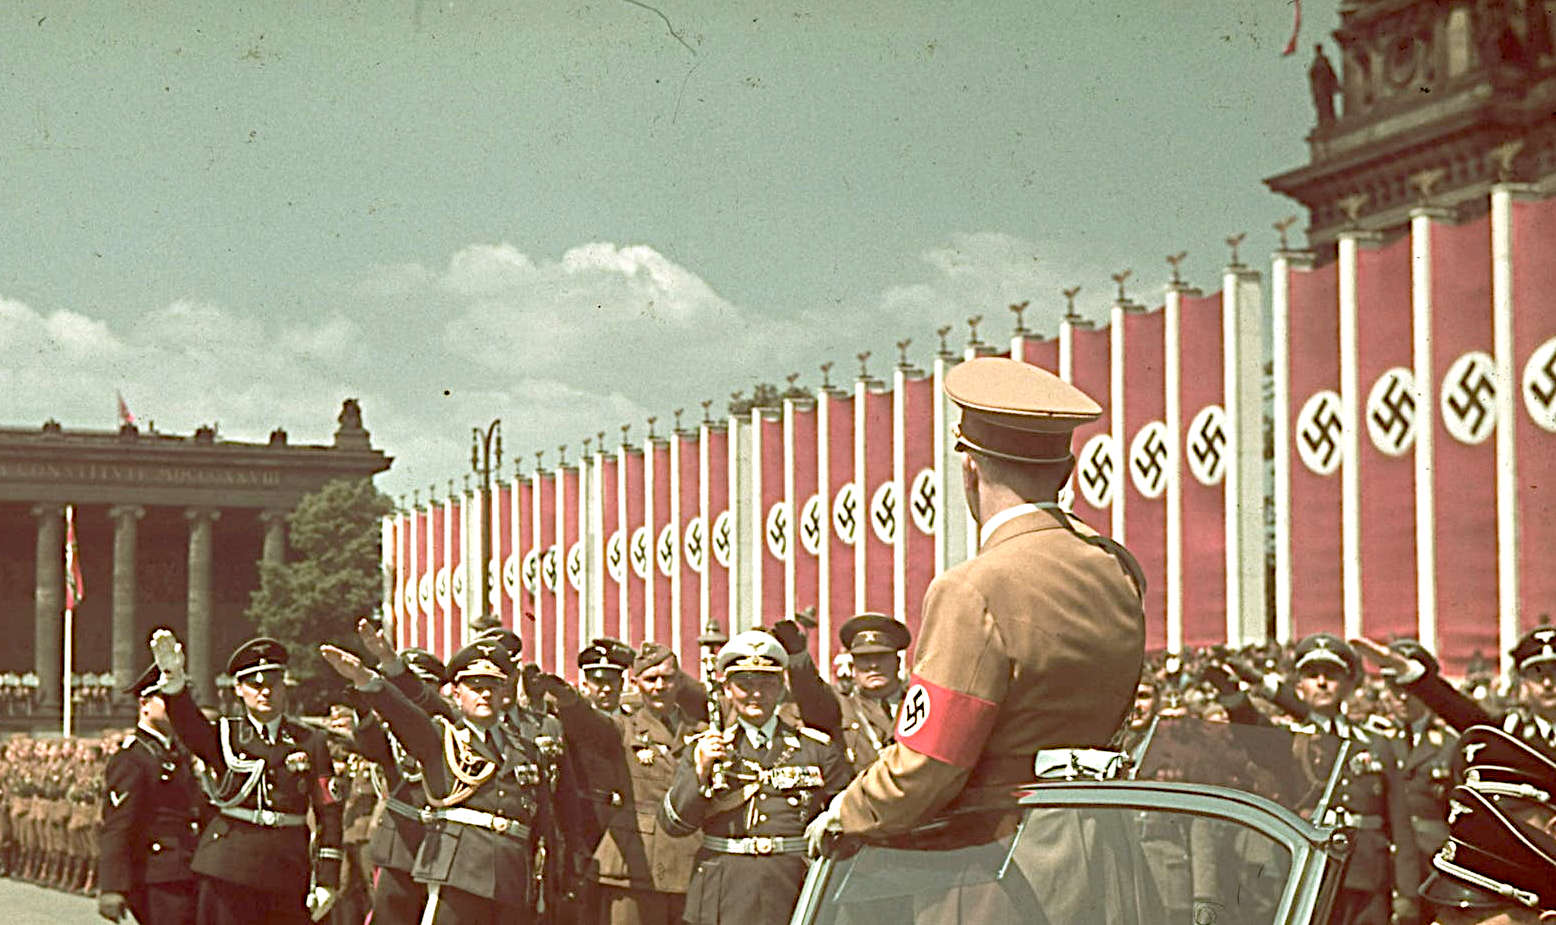 Adolf Hitler salutes at the Condor Legion parade in Nazi Germany